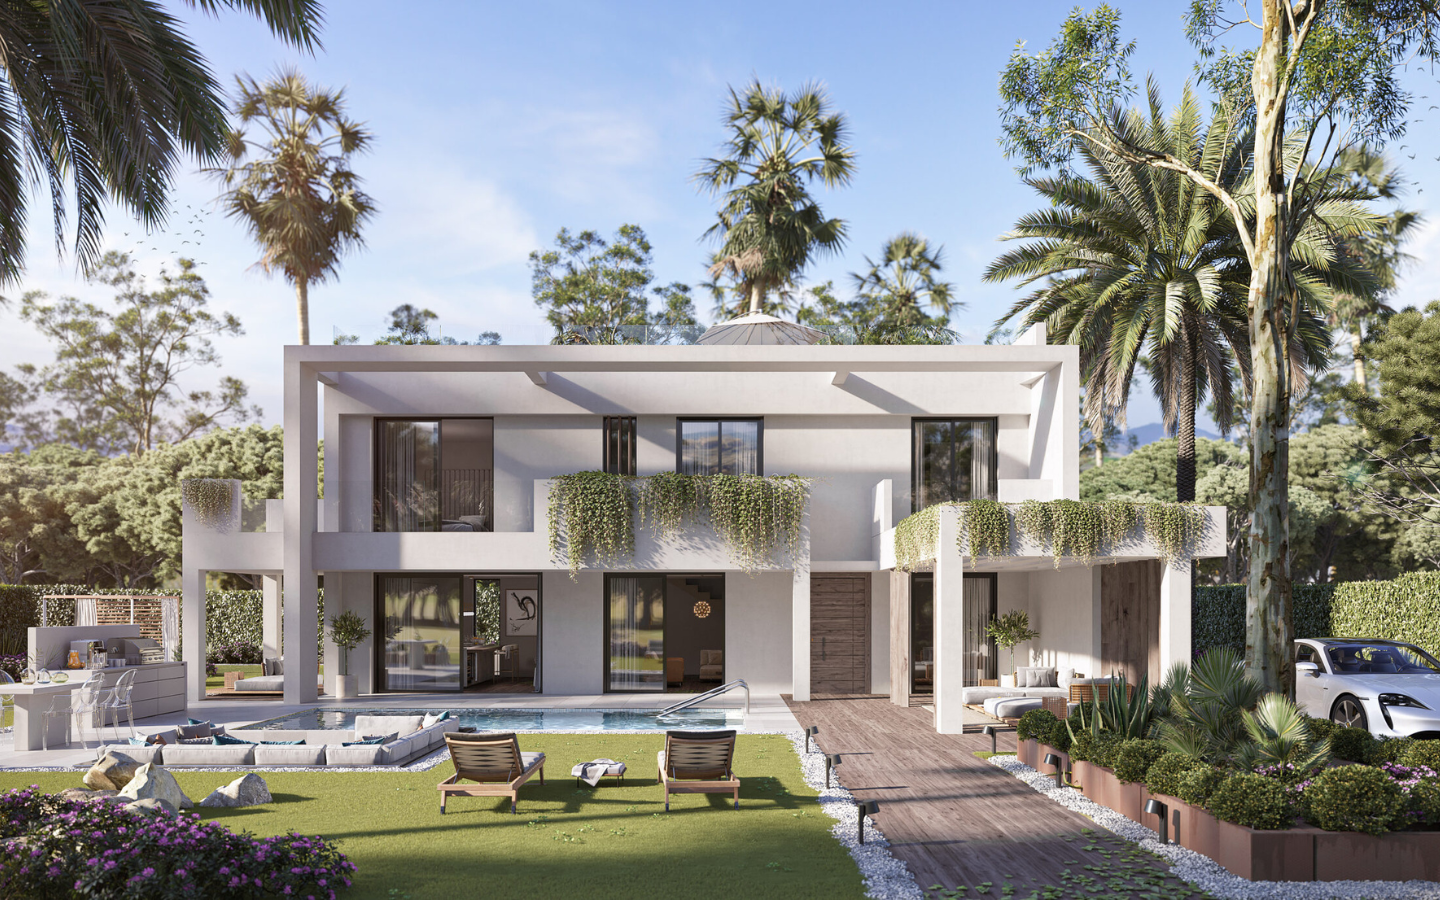 Villas contemporaine et moderne sur la Costa del Sol, La Paloma